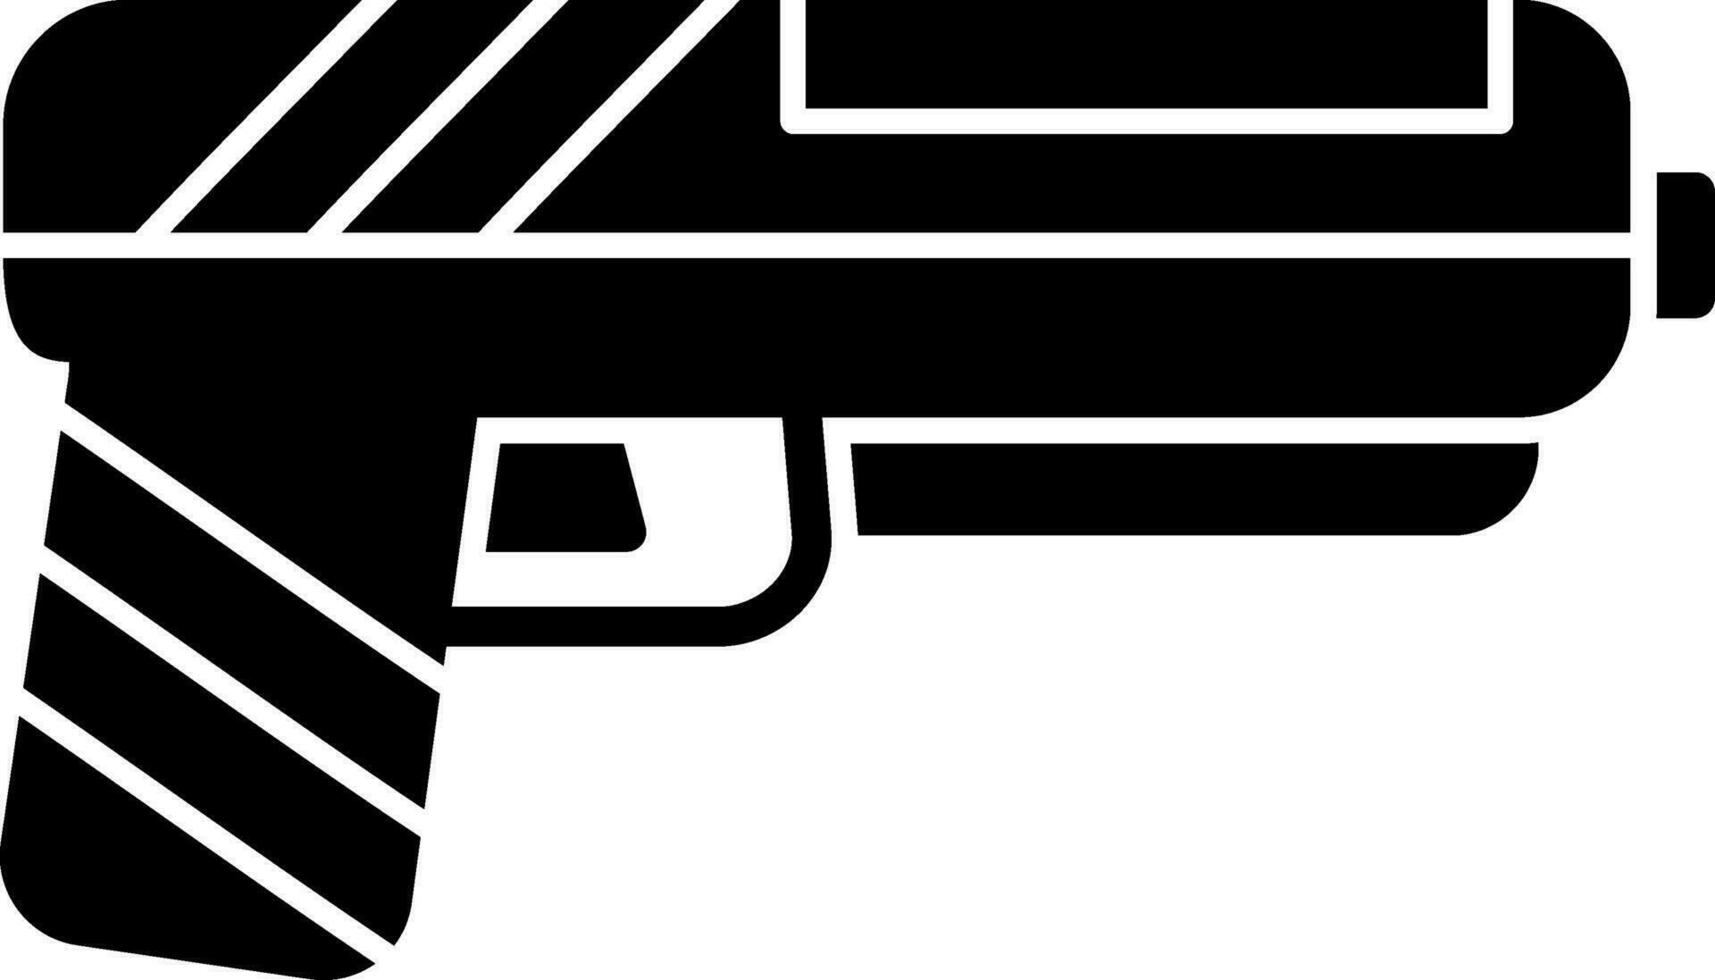 Pistol Vector Icon Design